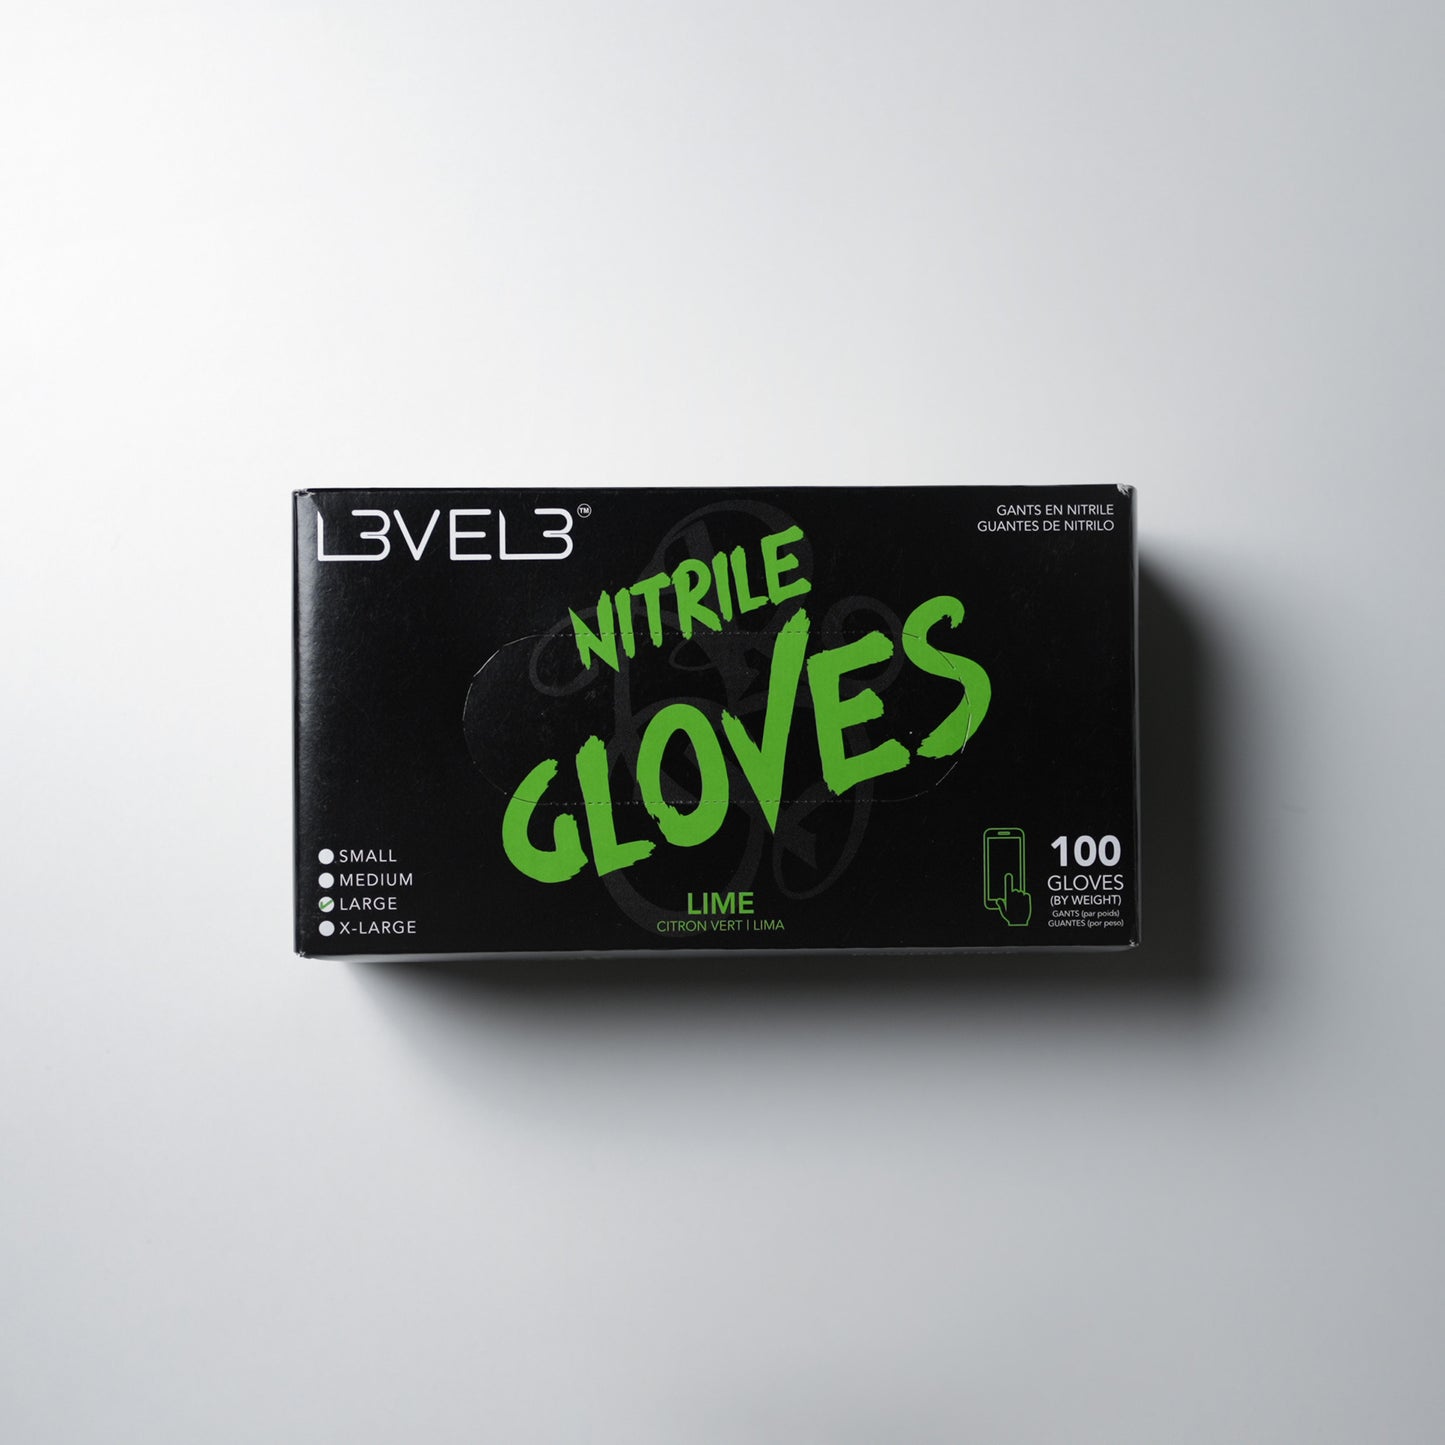 Level 3 Nitrile Gloves Lime